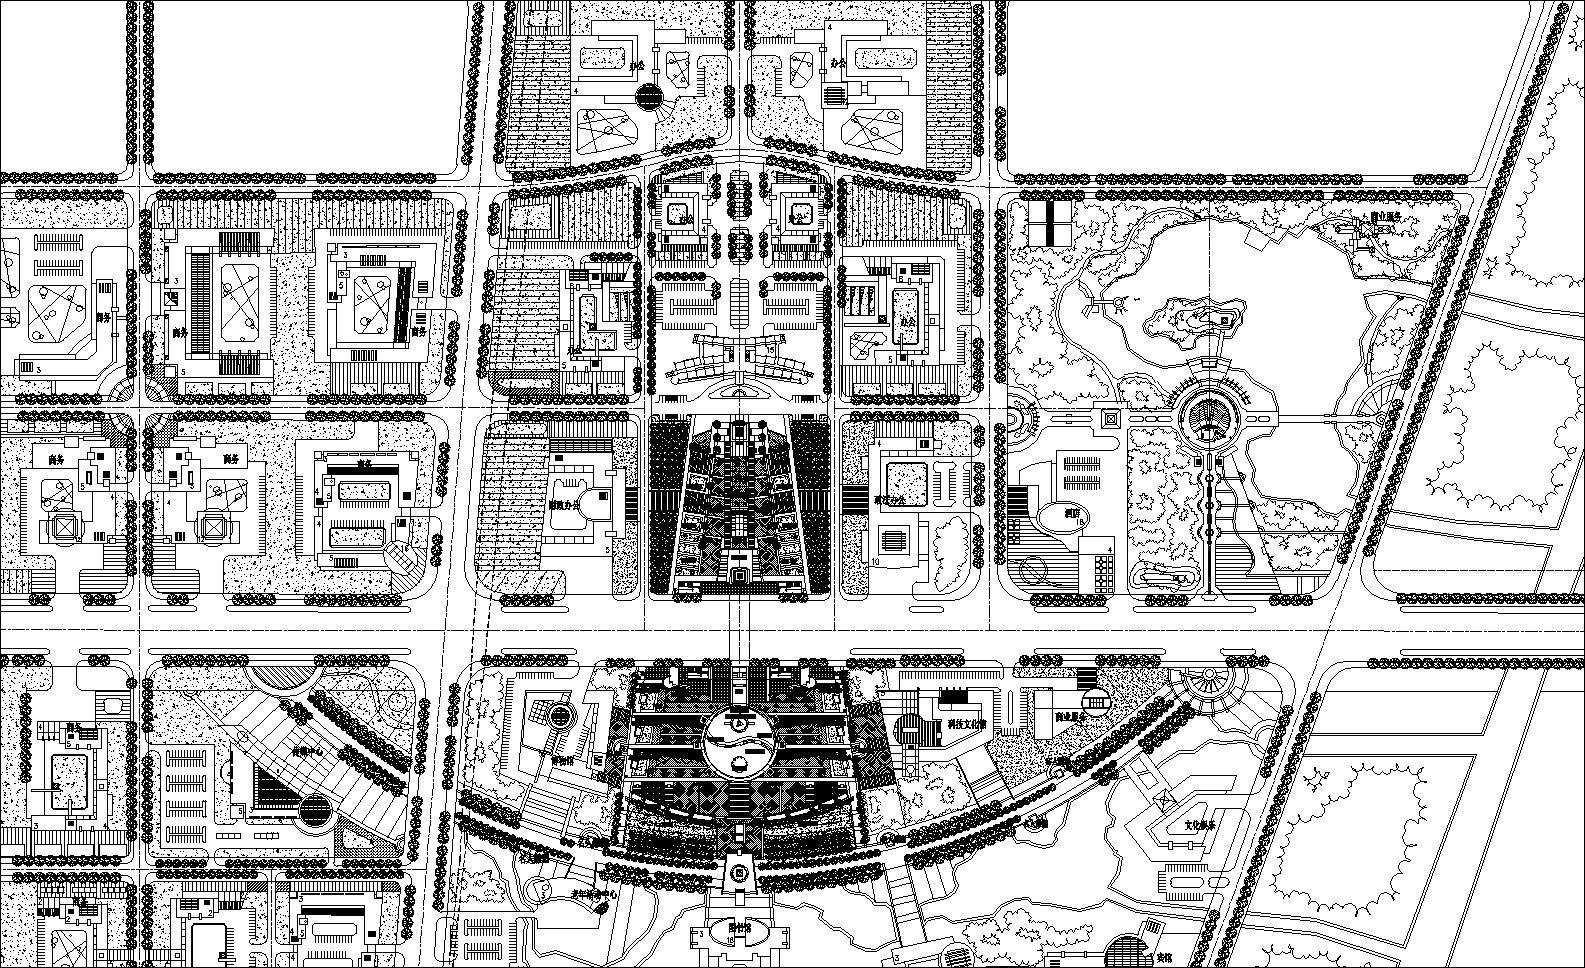 ★【Urban City Design Dwawings Download】High-quality Urban Design Drawings download - City Planning/Urban City Design/Urban Graphics